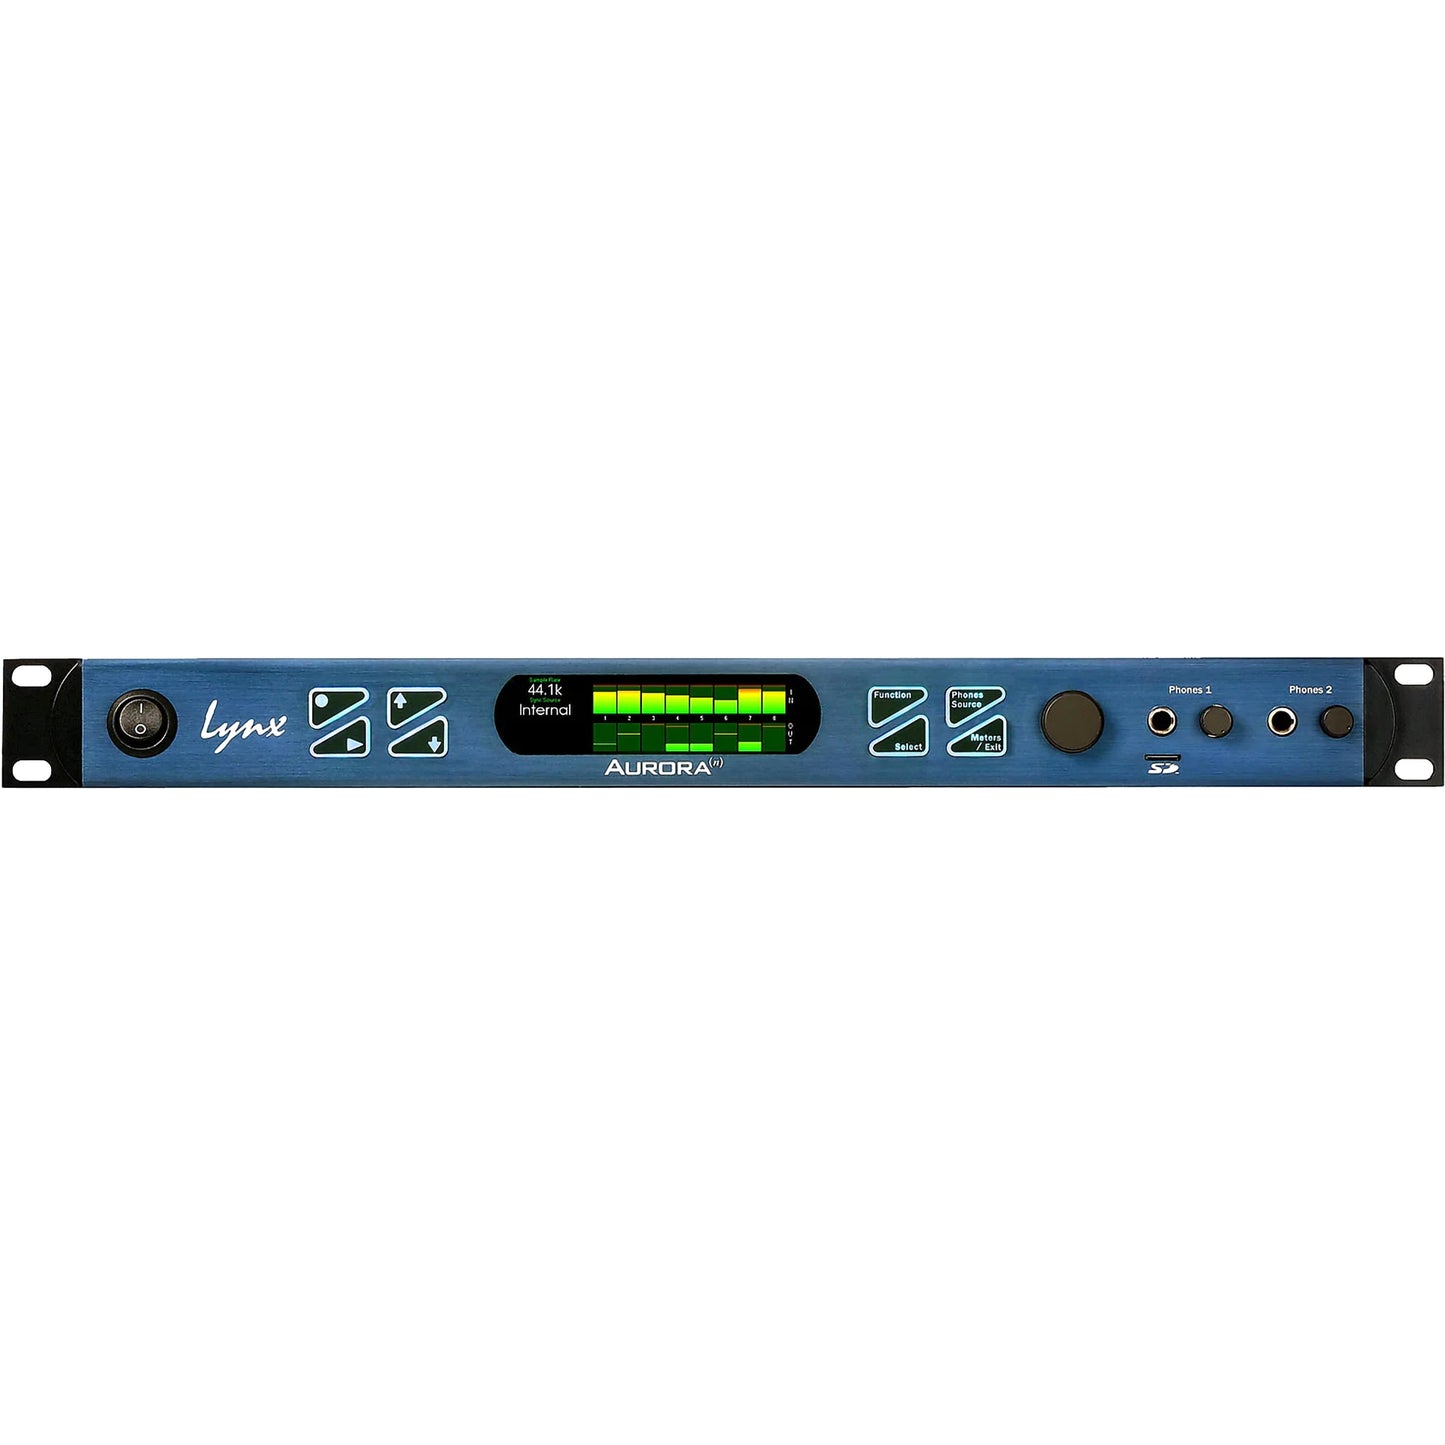 Lynx Studio Technology Aurora (n) 16 Pro Tools|HD AD/DA Converter